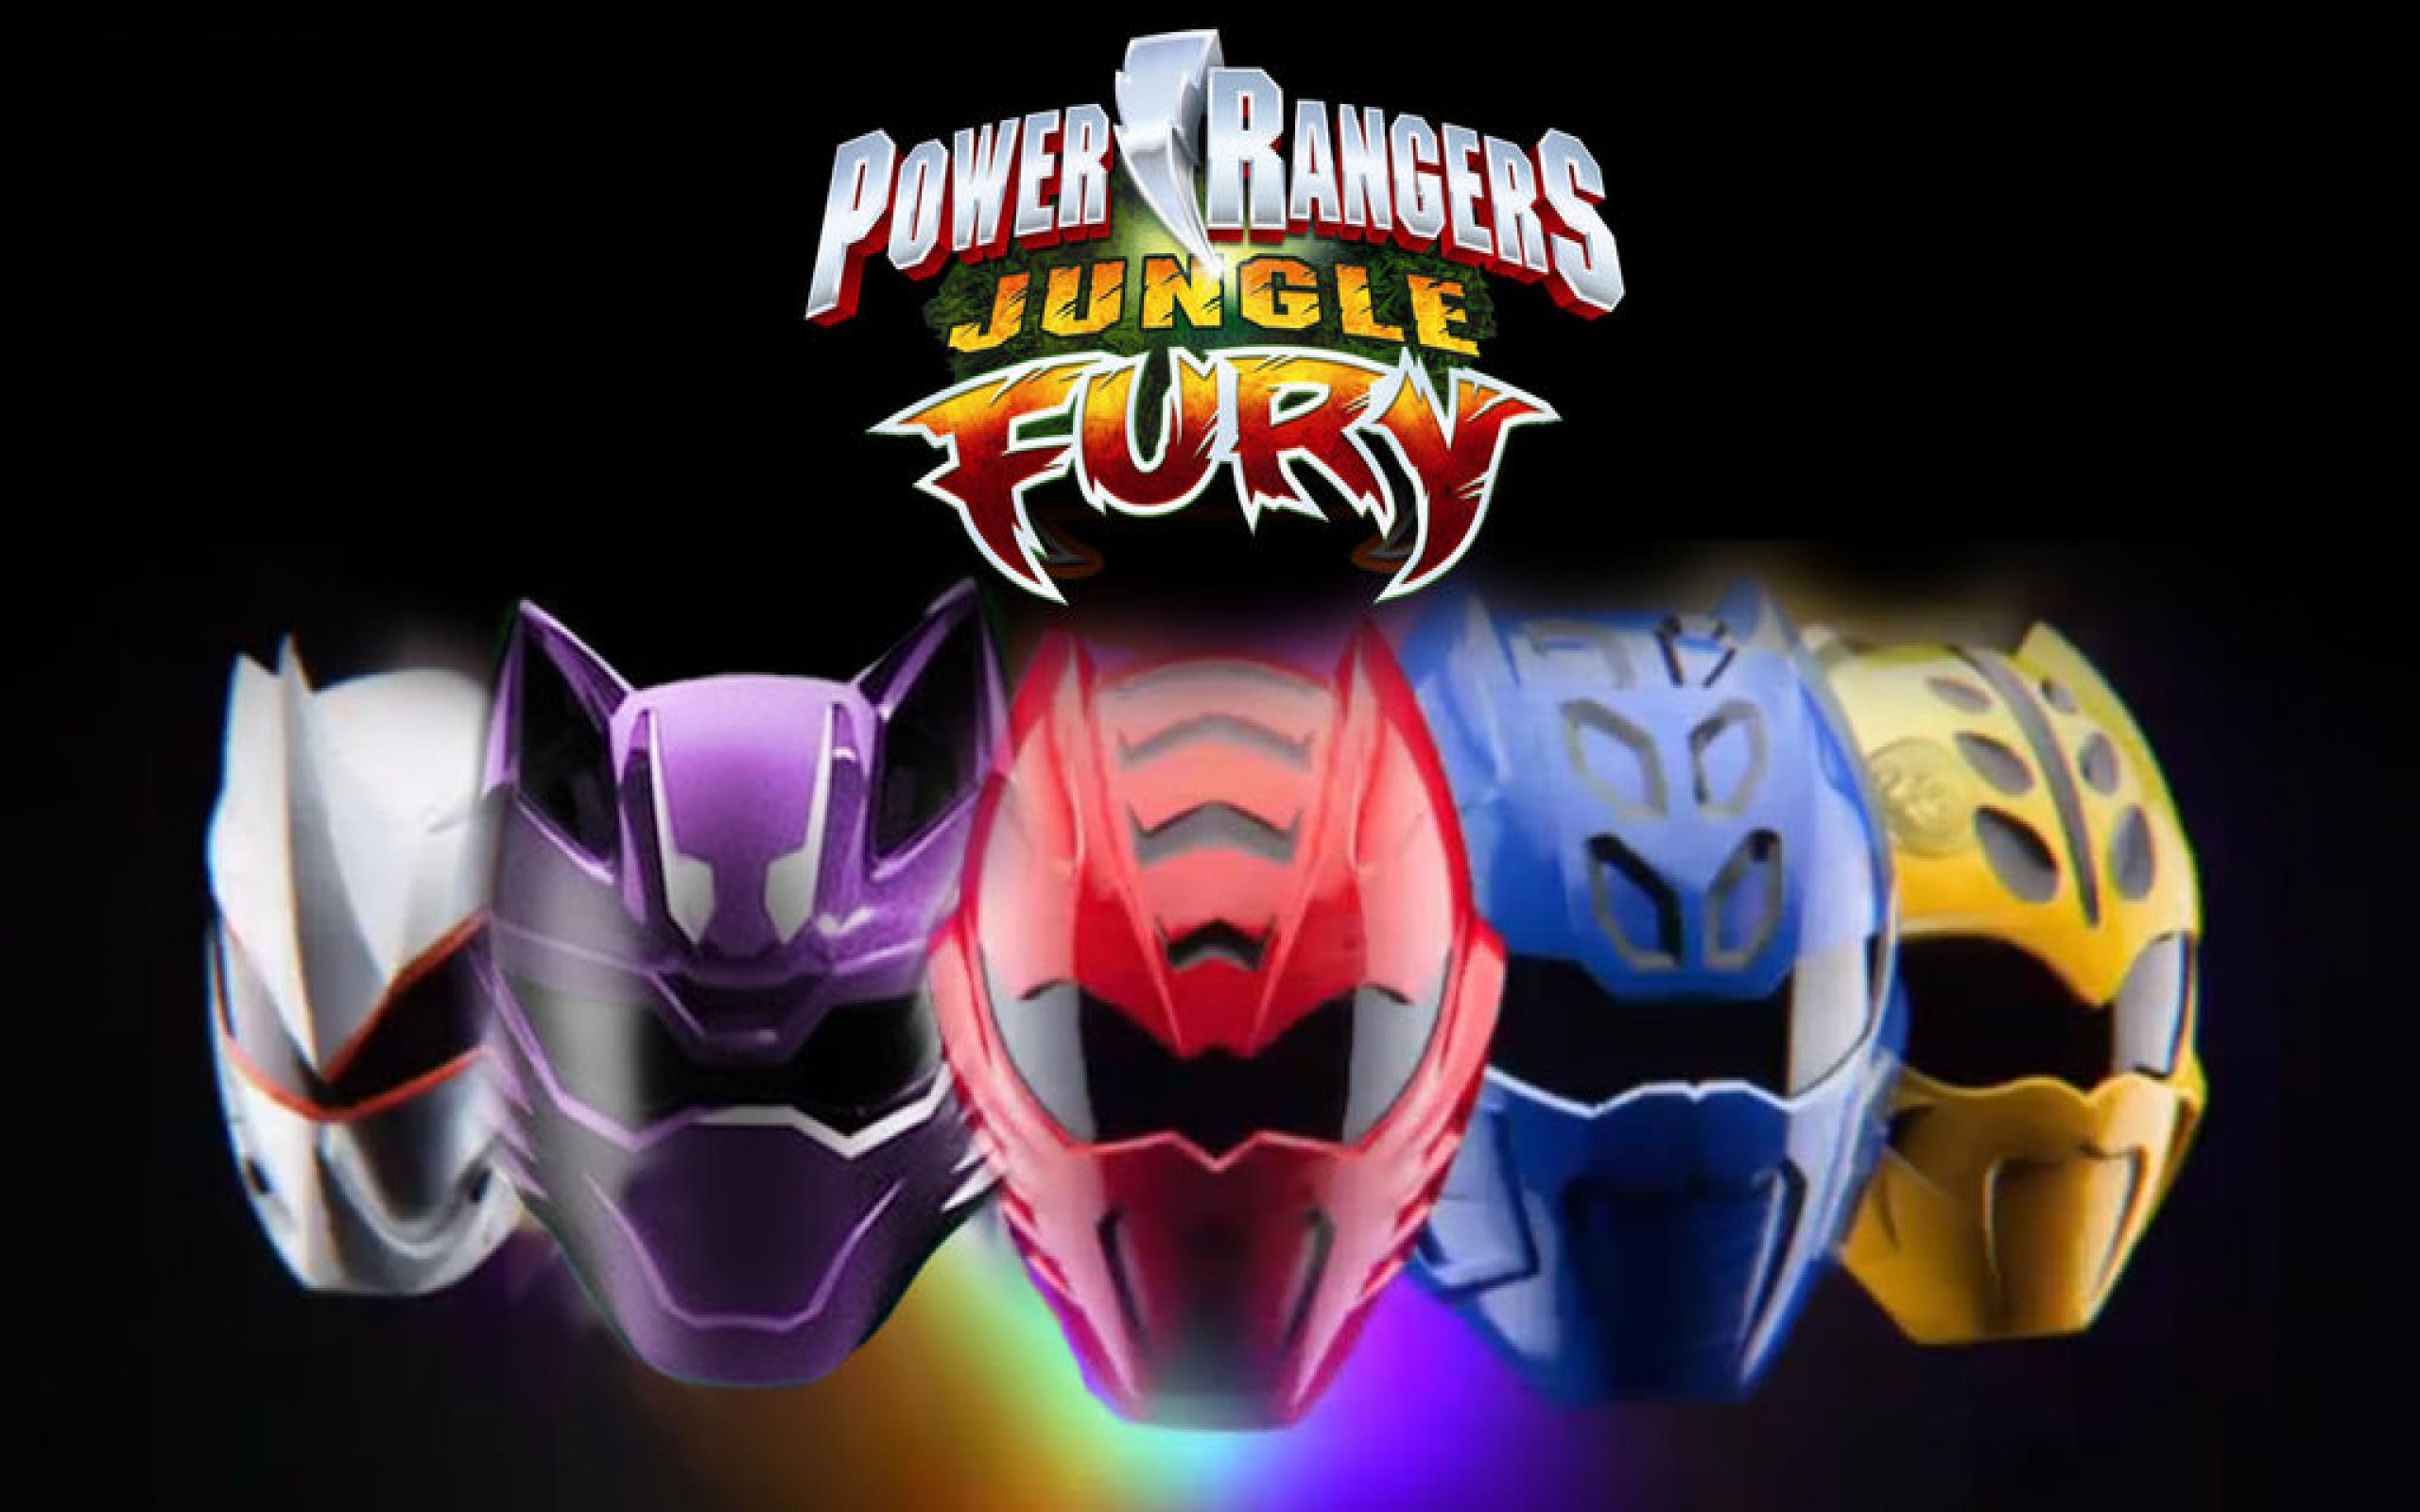 Power Rangers Jungle Fury Wallpaper I46CQ2 1024x567 px